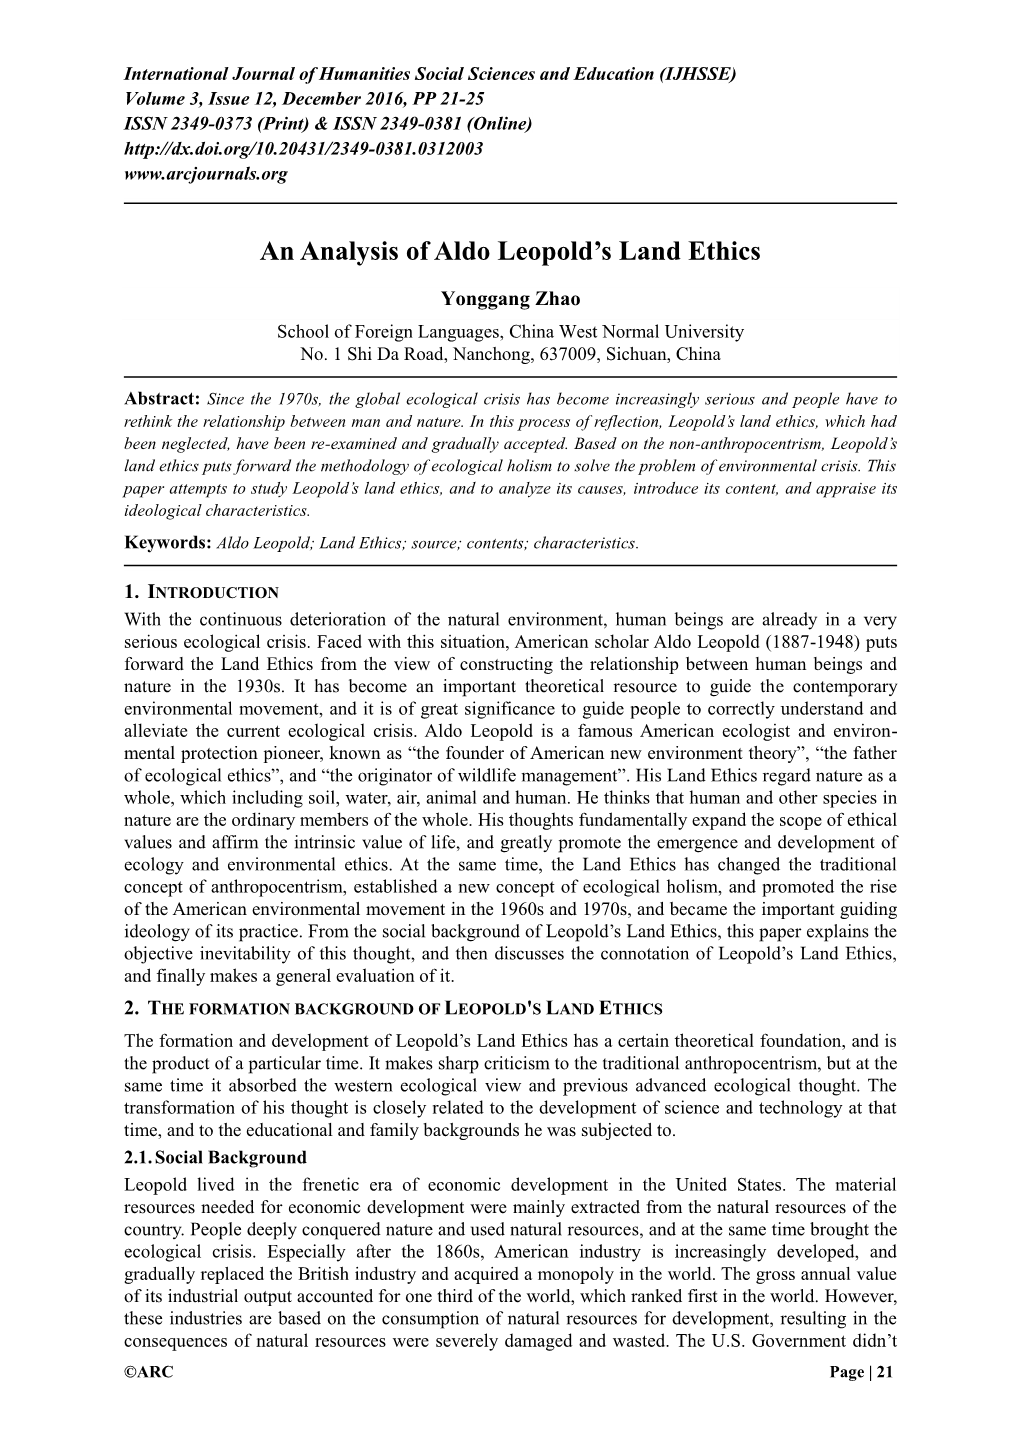 An Analysis of Aldo Leopold's Land Ethics